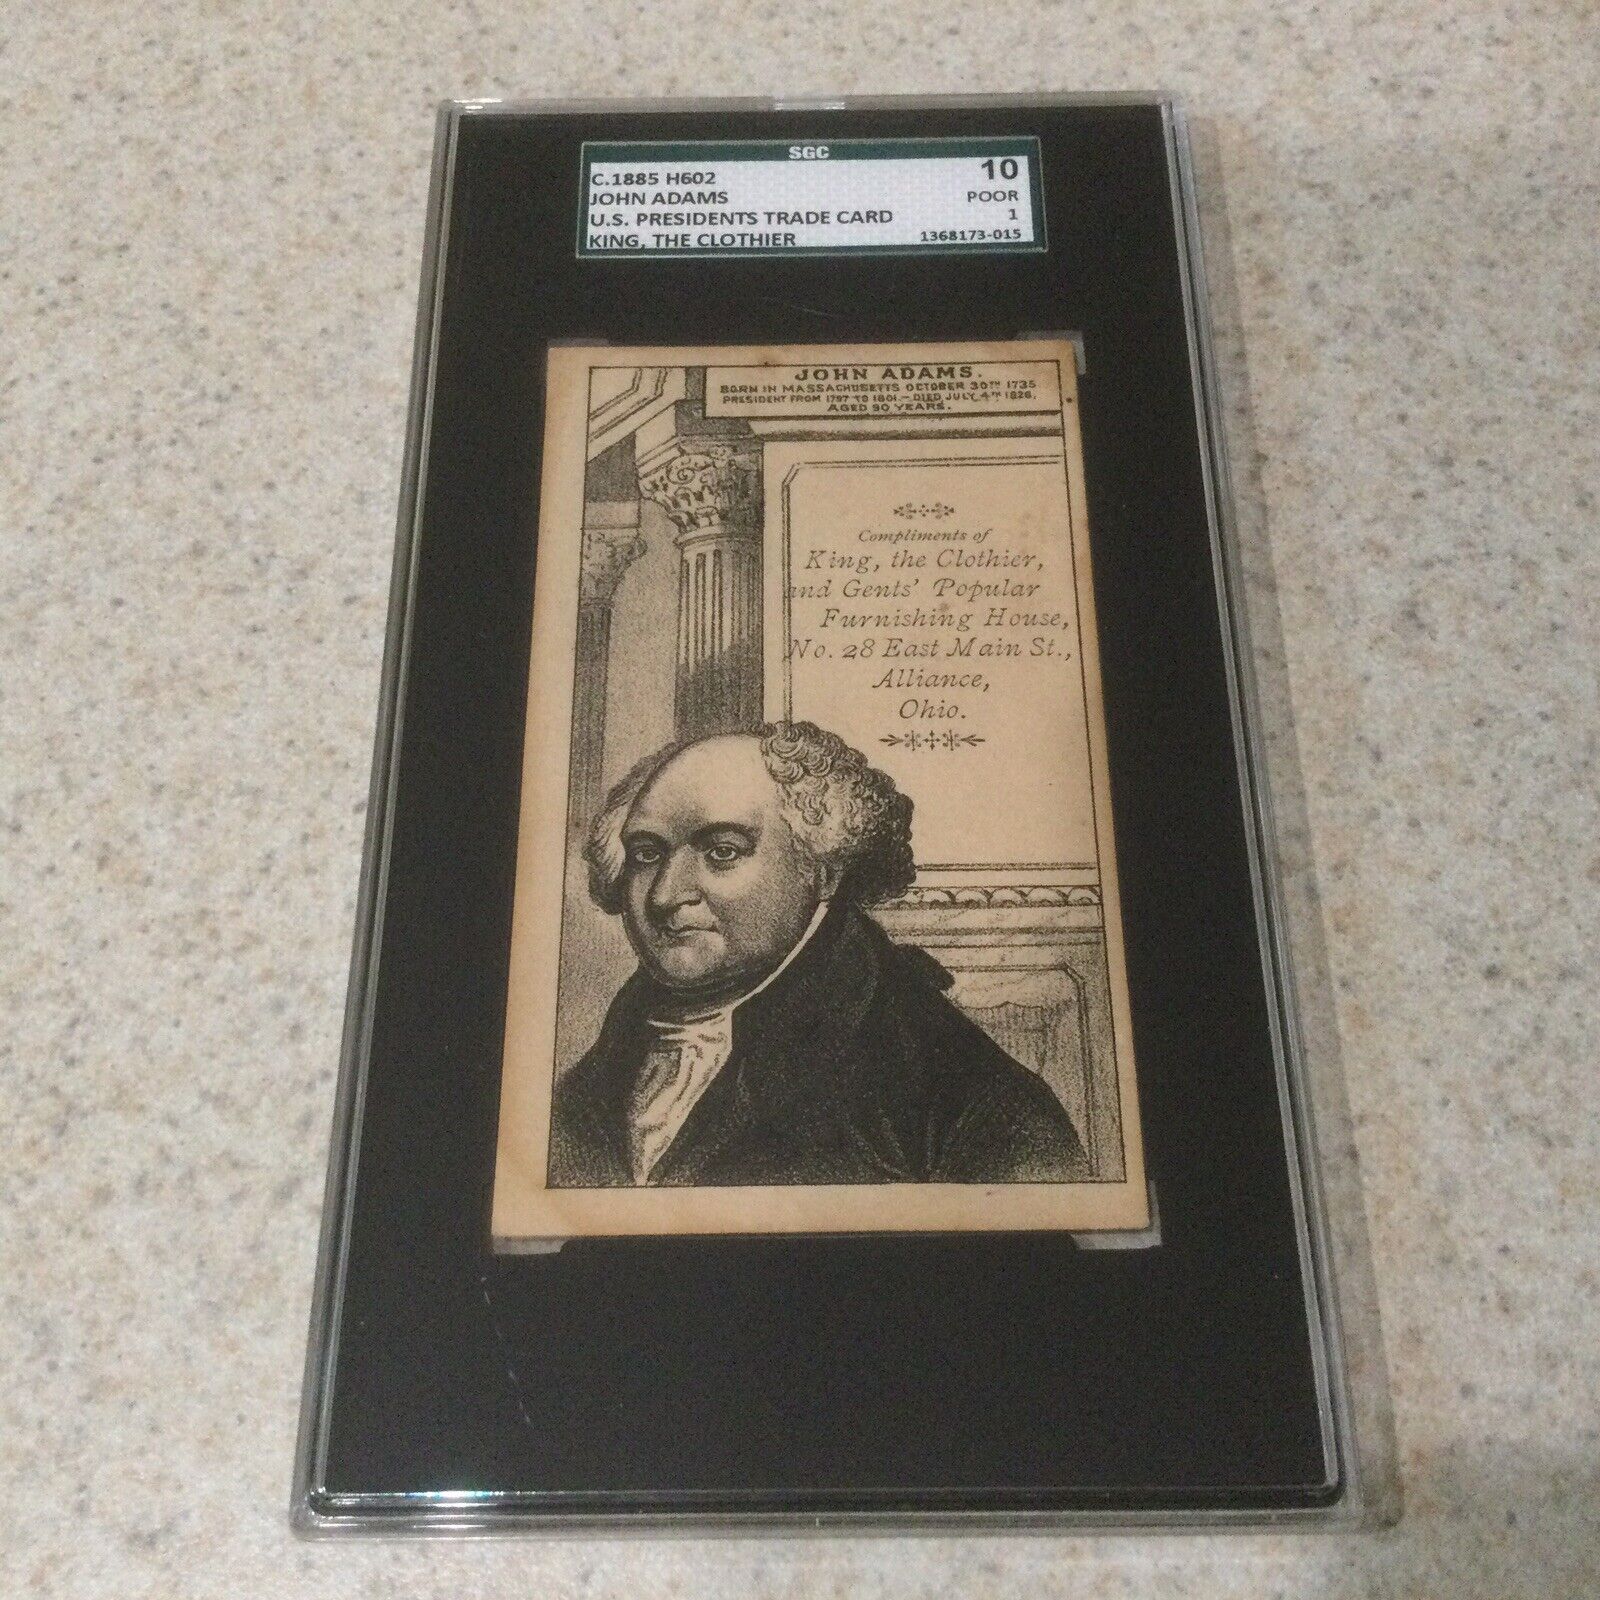 c.1885 H602 U.S. Presidents Trade Card - John Adams SGC Poor 1